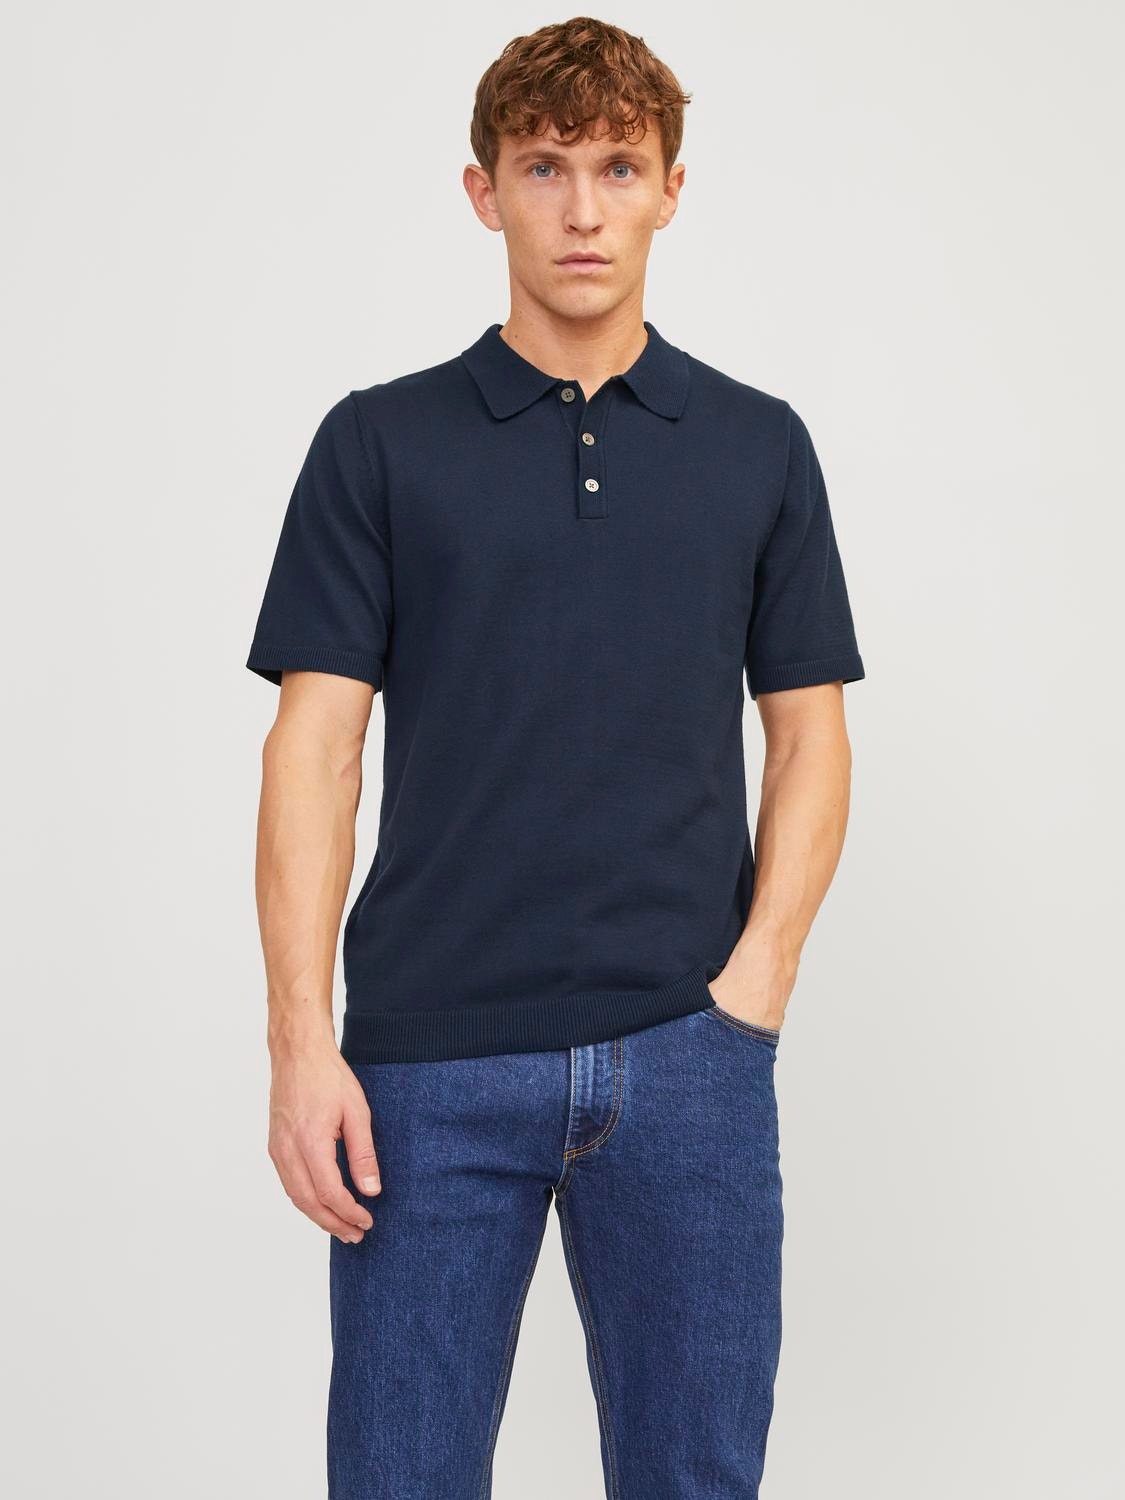 Jack & Jones Καλοκαιρινό μπλουζάκι -Navy Blazer - 12254573